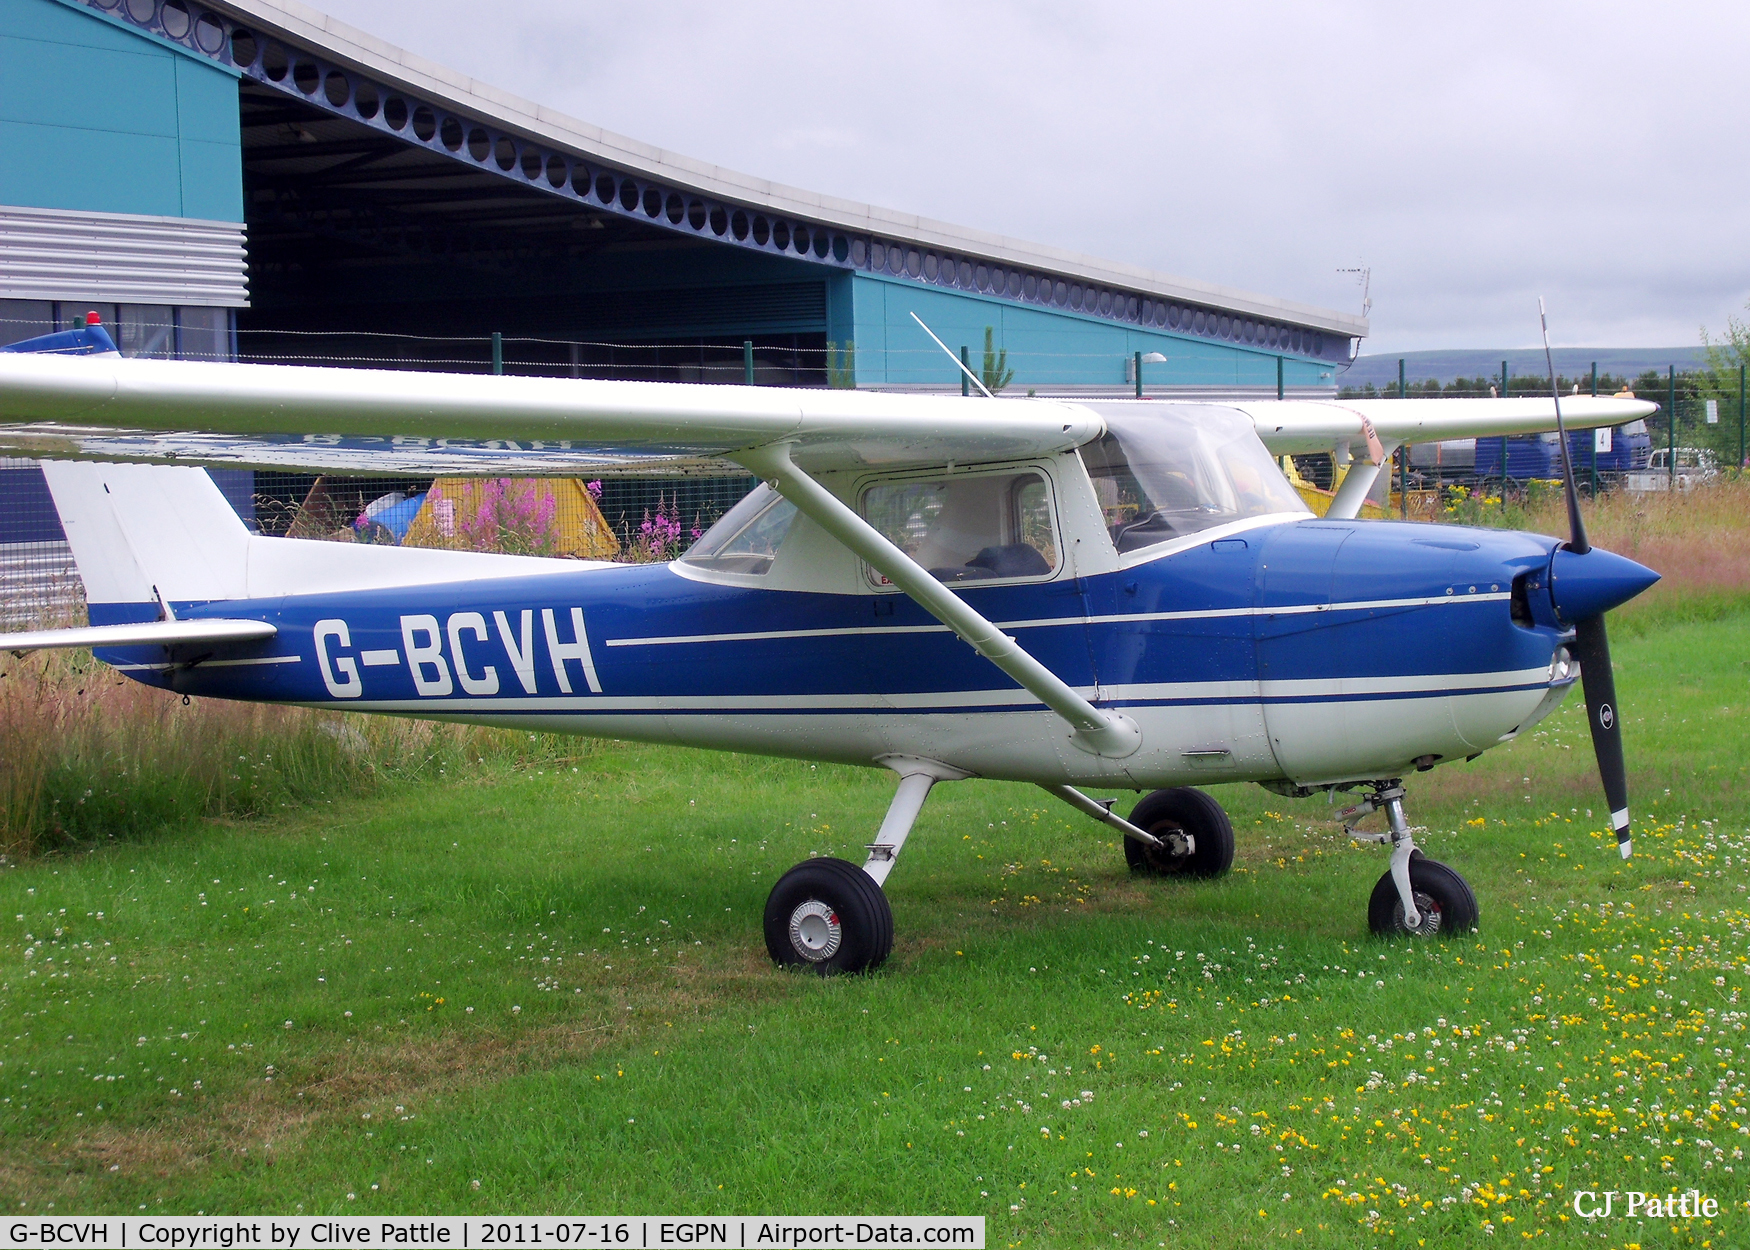 G-BCVH, 1974 Reims FRA150L Aerobat C/N 0258, Parked at Dundee EGPN